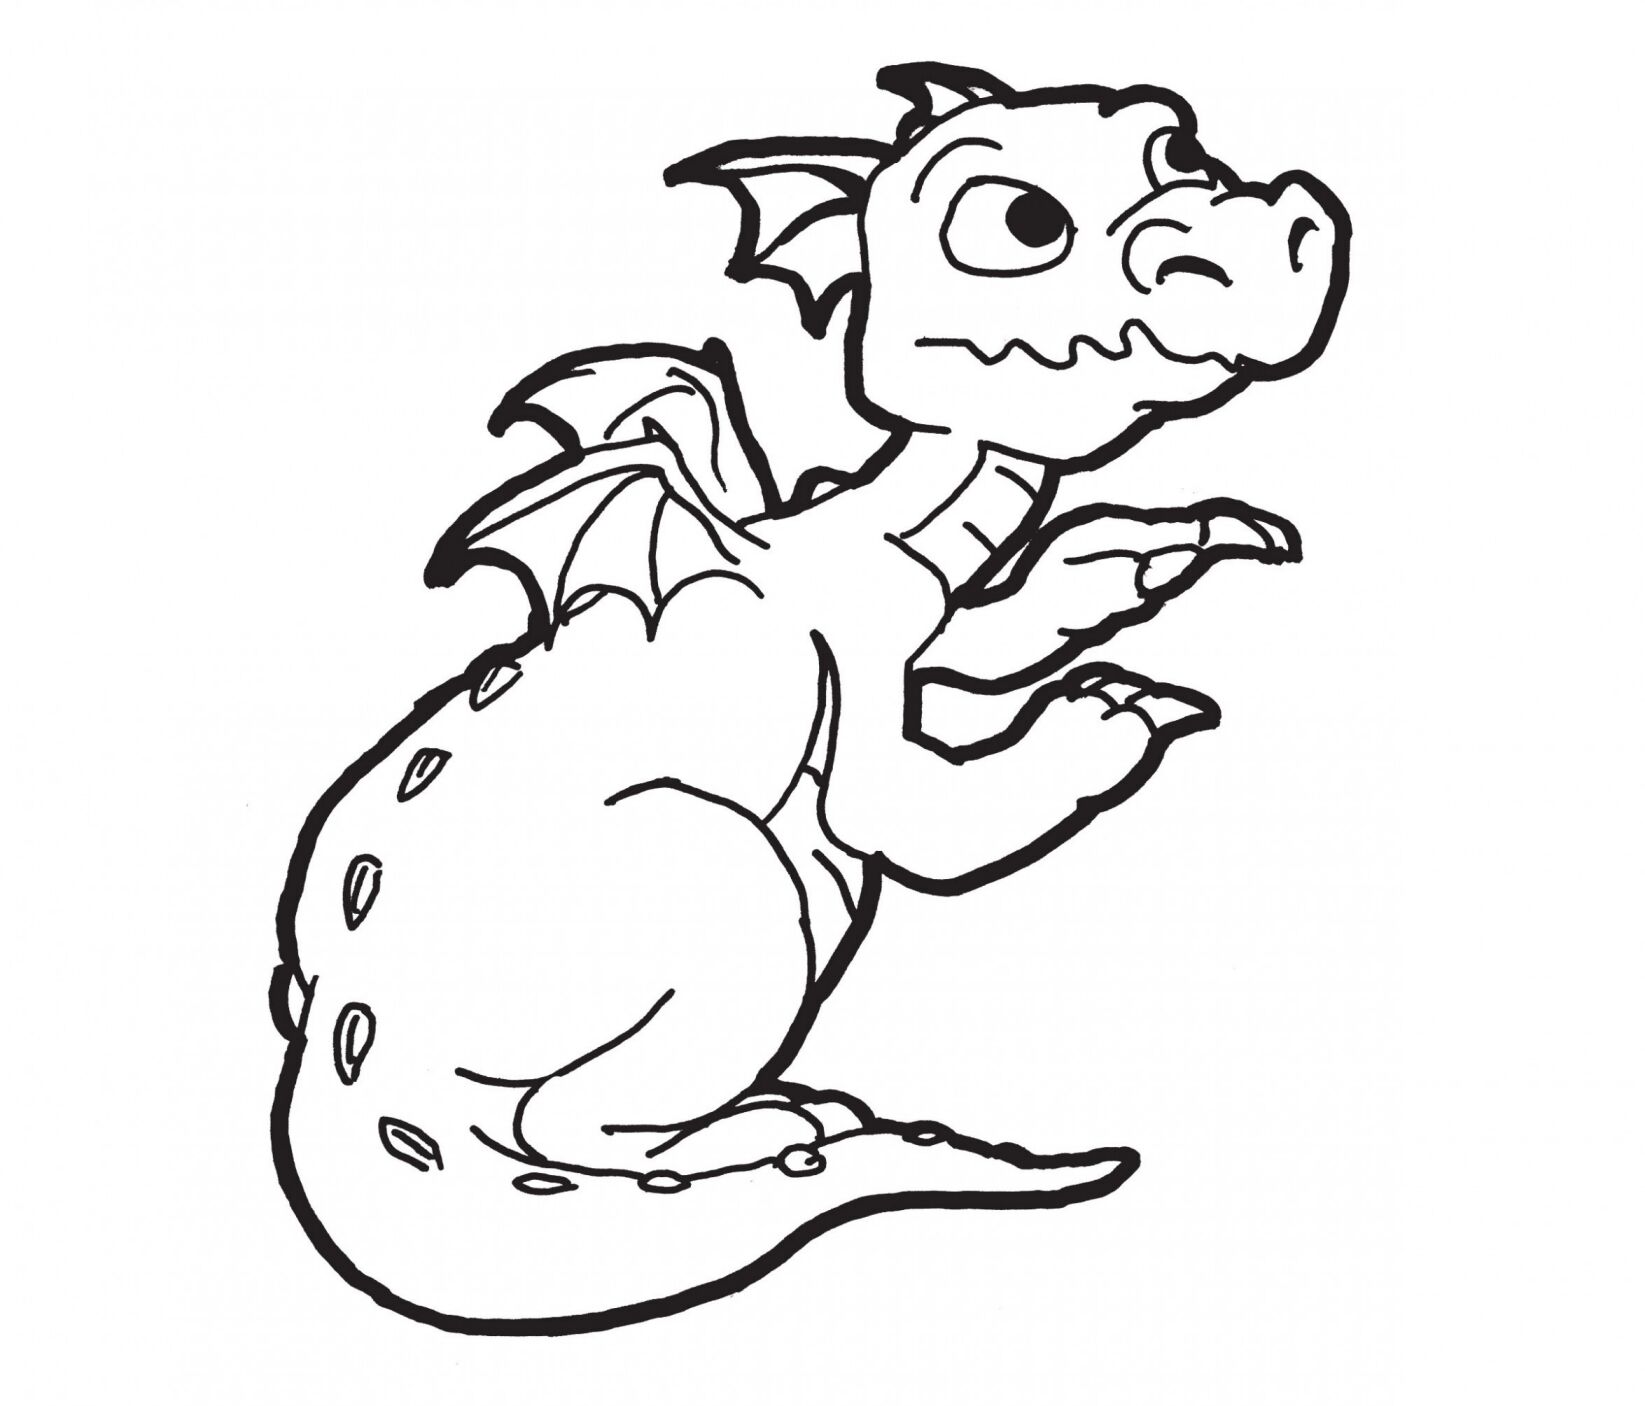 Dragon Coloring Pages for Preschool - Preschool and Kindergarten